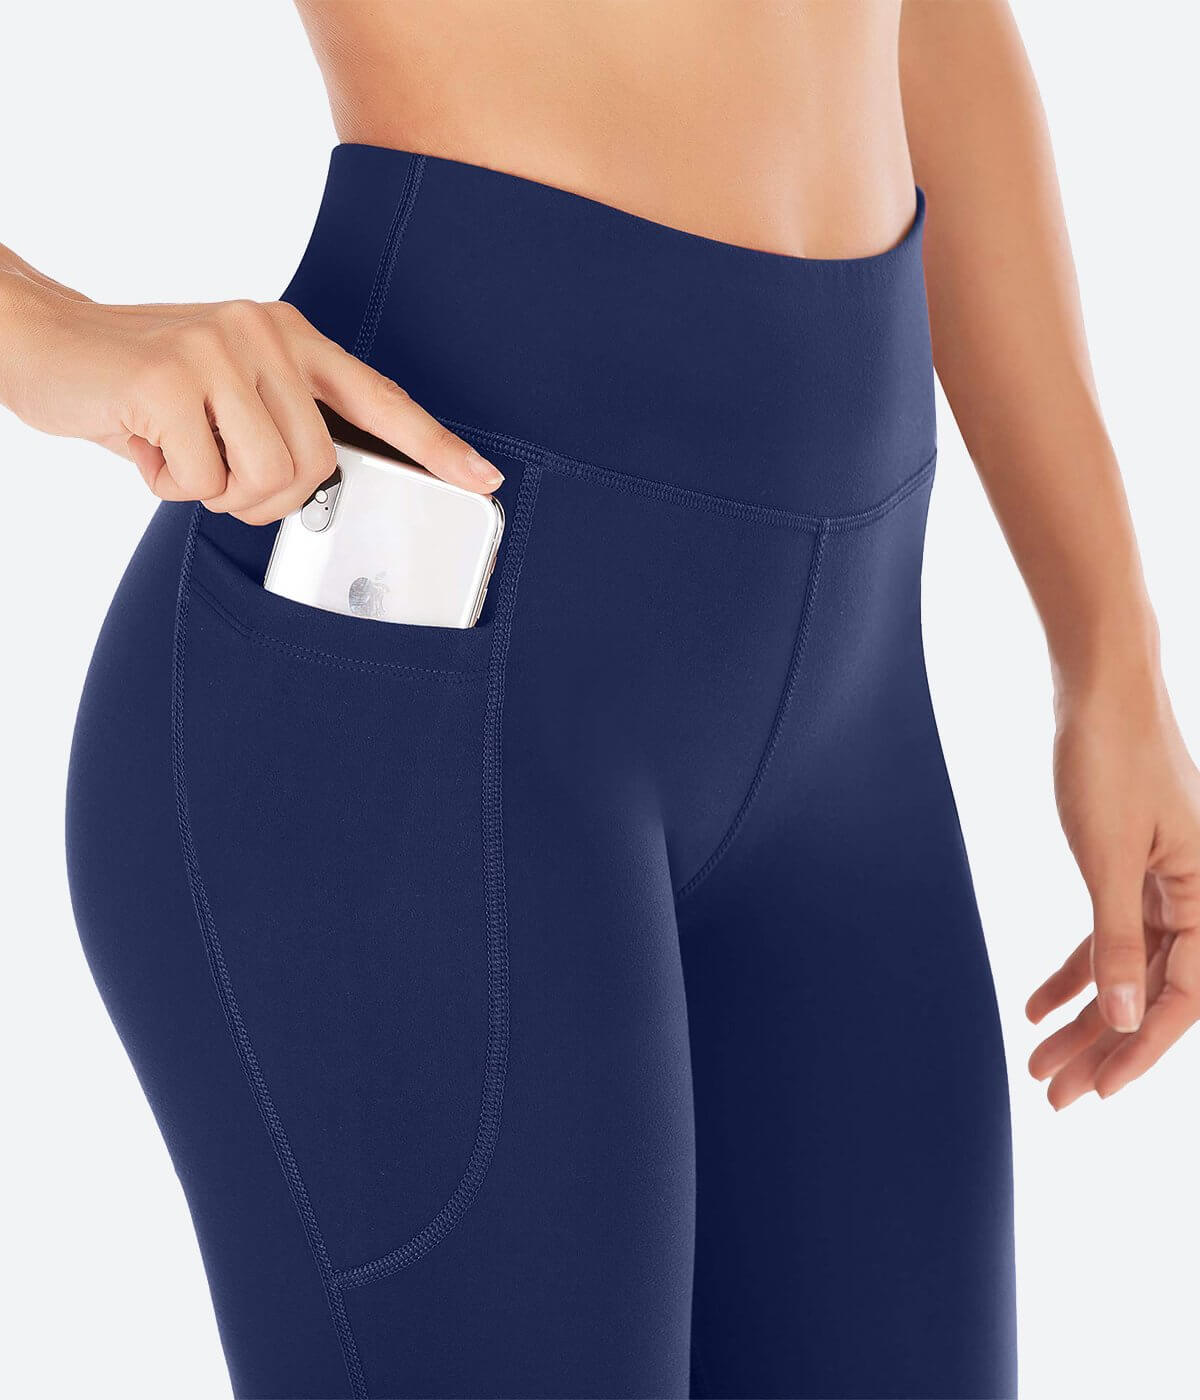 Buy 180° Bootcut Yoga Pants (S) Black at Amazon.in